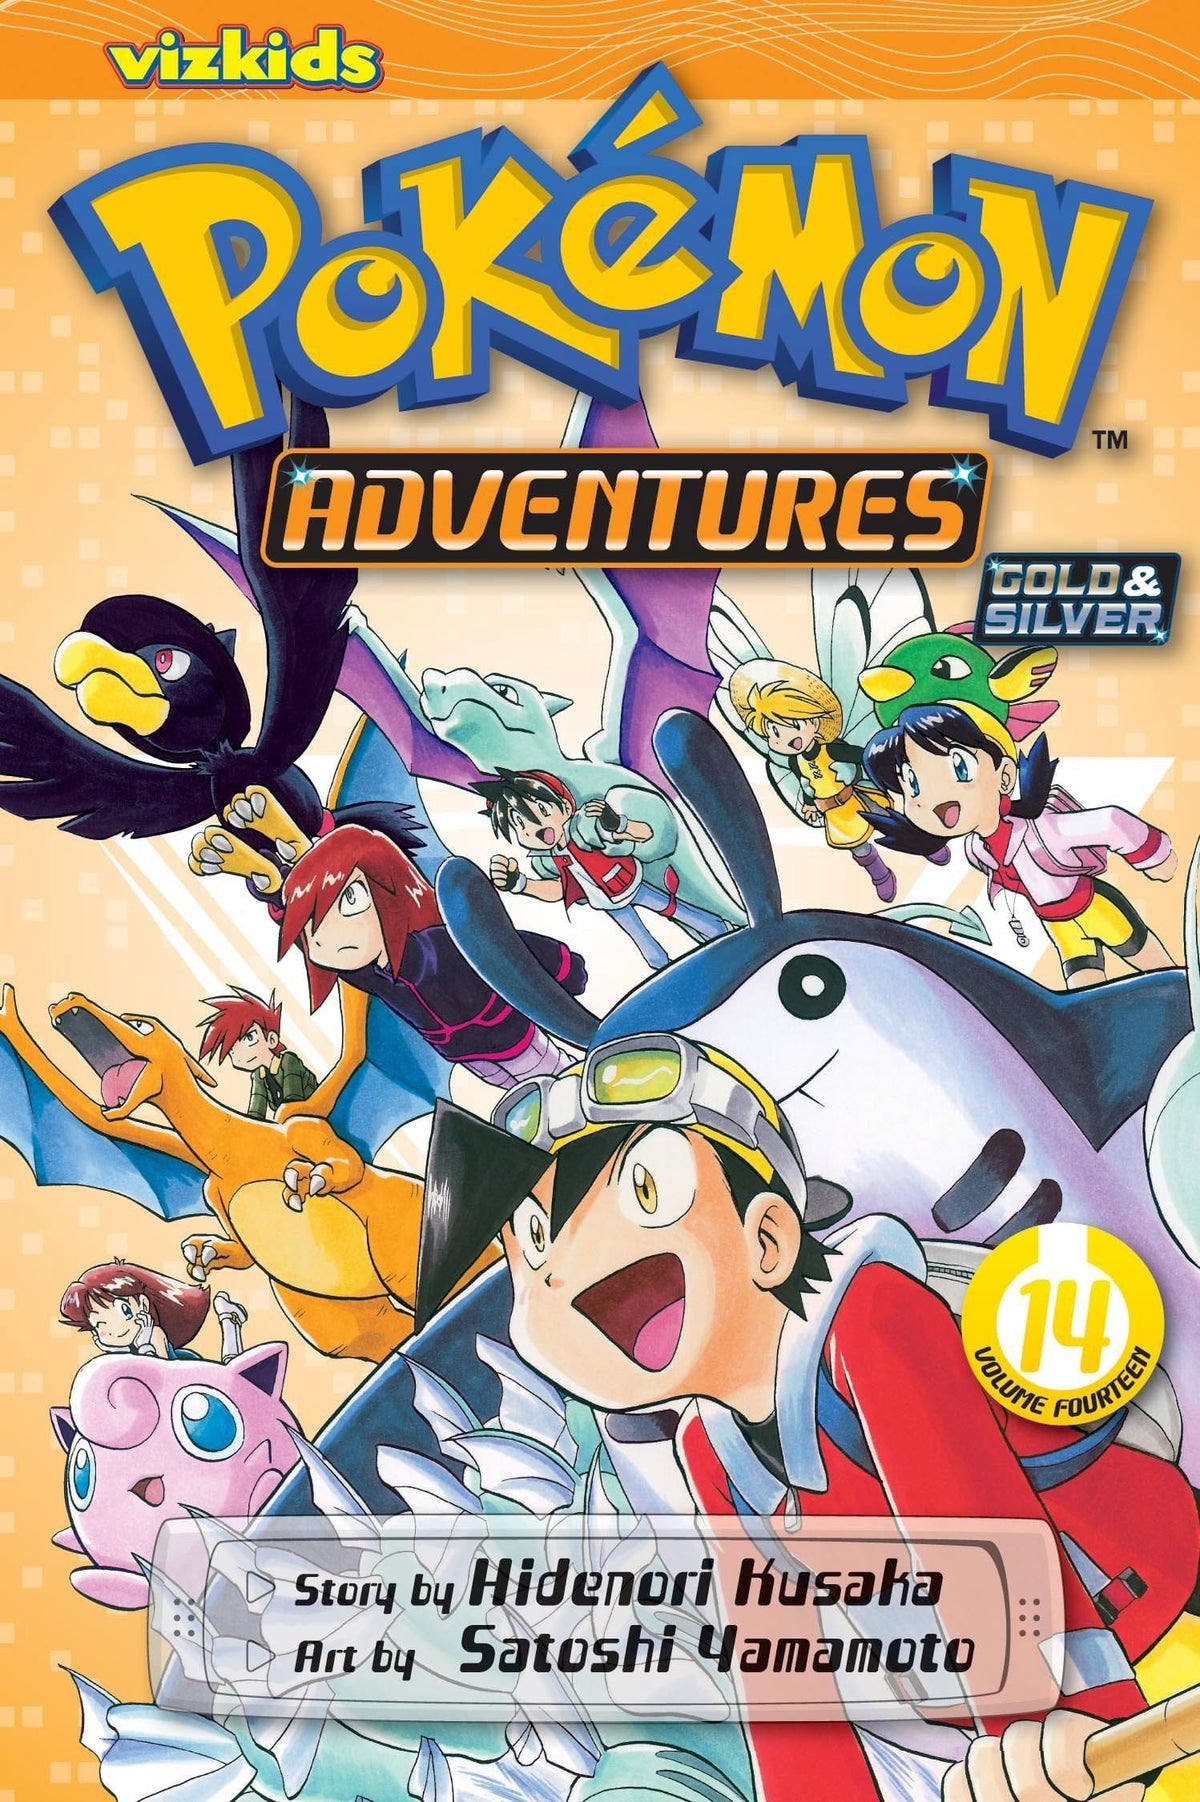 Pokemon: Adventures - Gold & Silver Vol. 14 - Third Eye